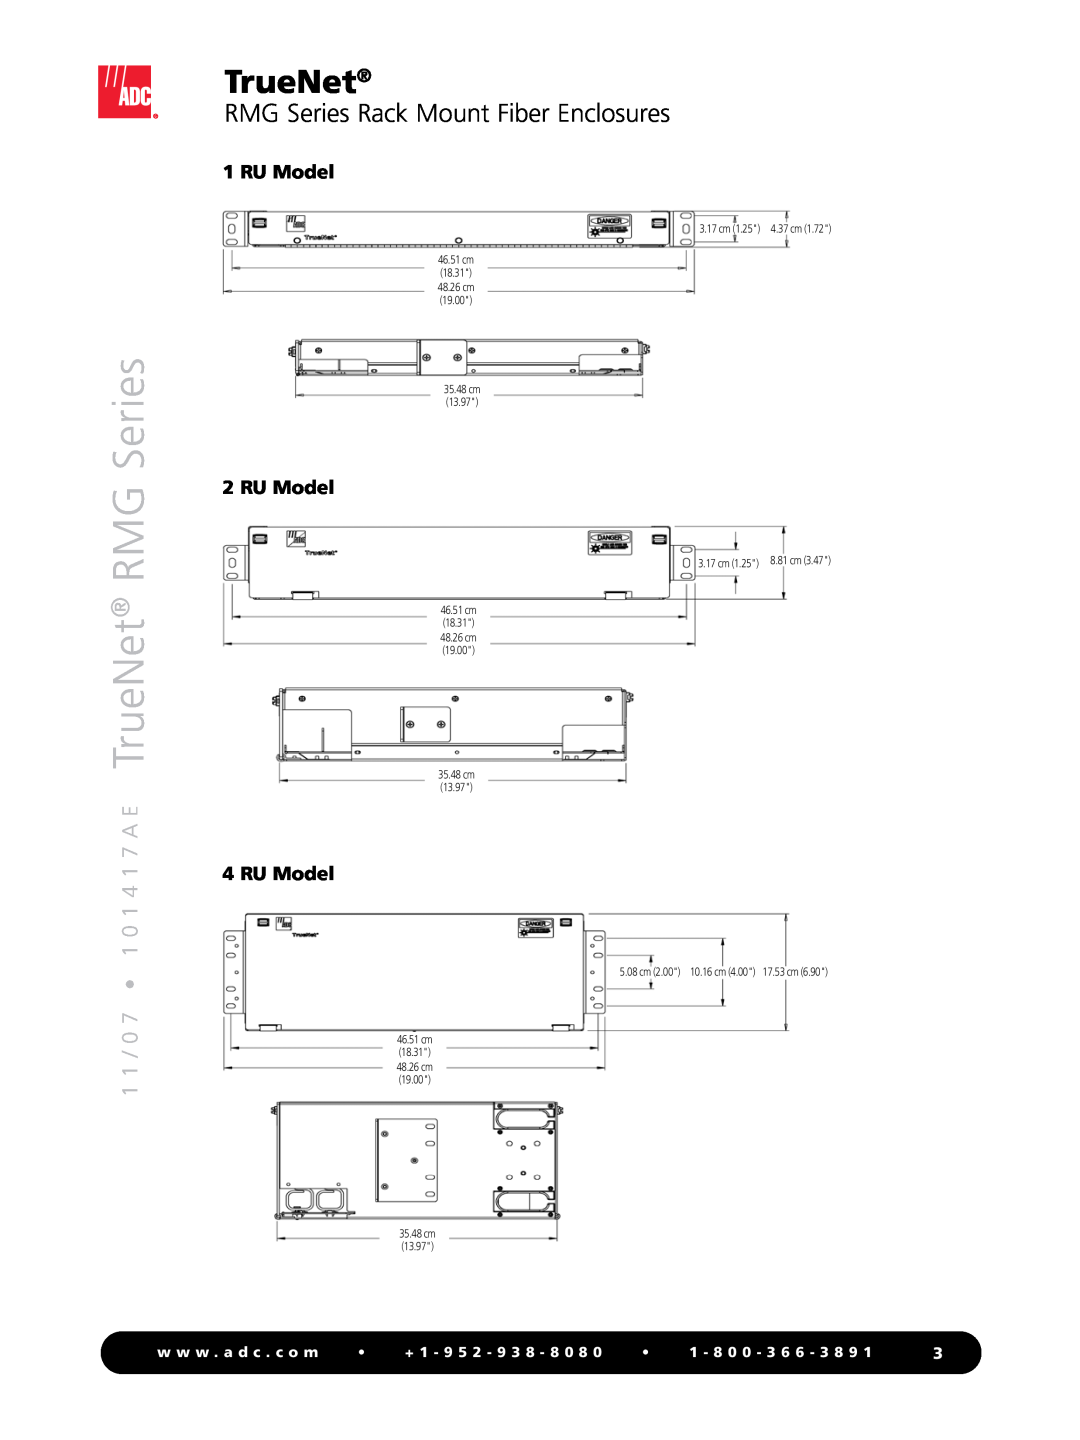 ADC manual RU Model, RMG Series Rack Mount Fiber Enclosures, 1 1 / 0 7 1 0 1 4 1 7 A E TrueNet RMG Series 